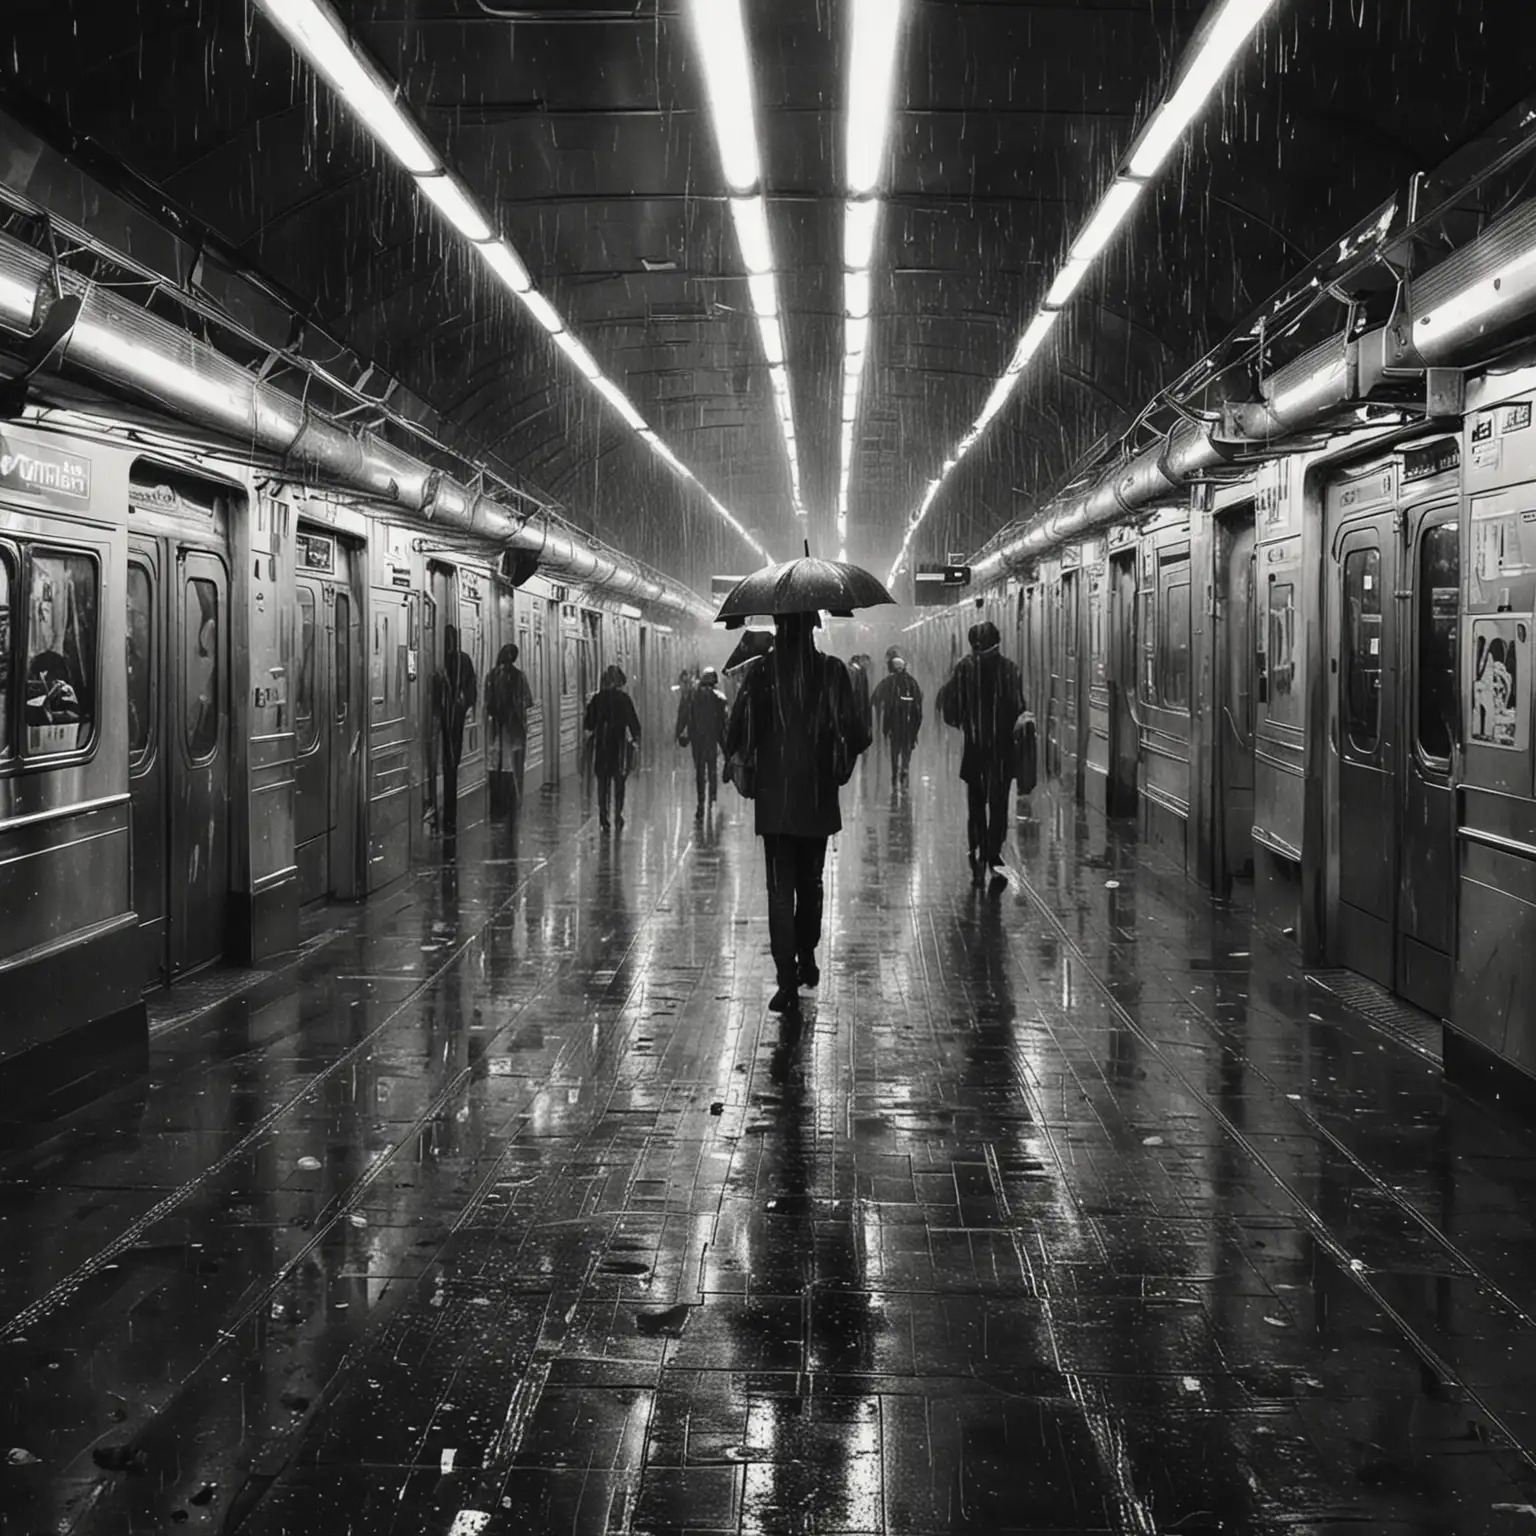 Urban-Subway-Rain-Scene-with-Neon-Lights-and-Reflections